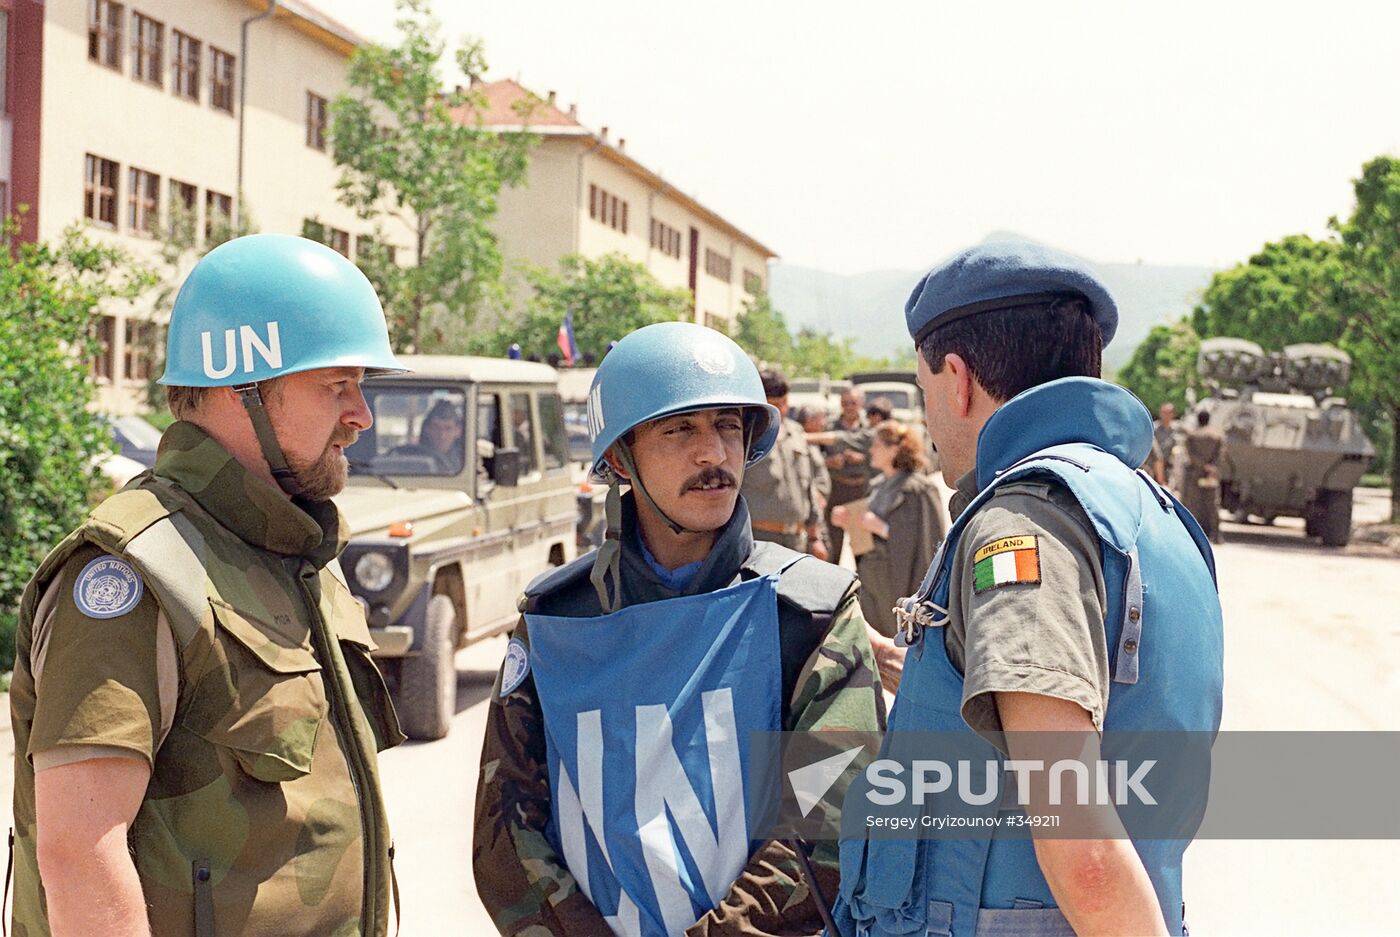 UN troops in Sarajevo